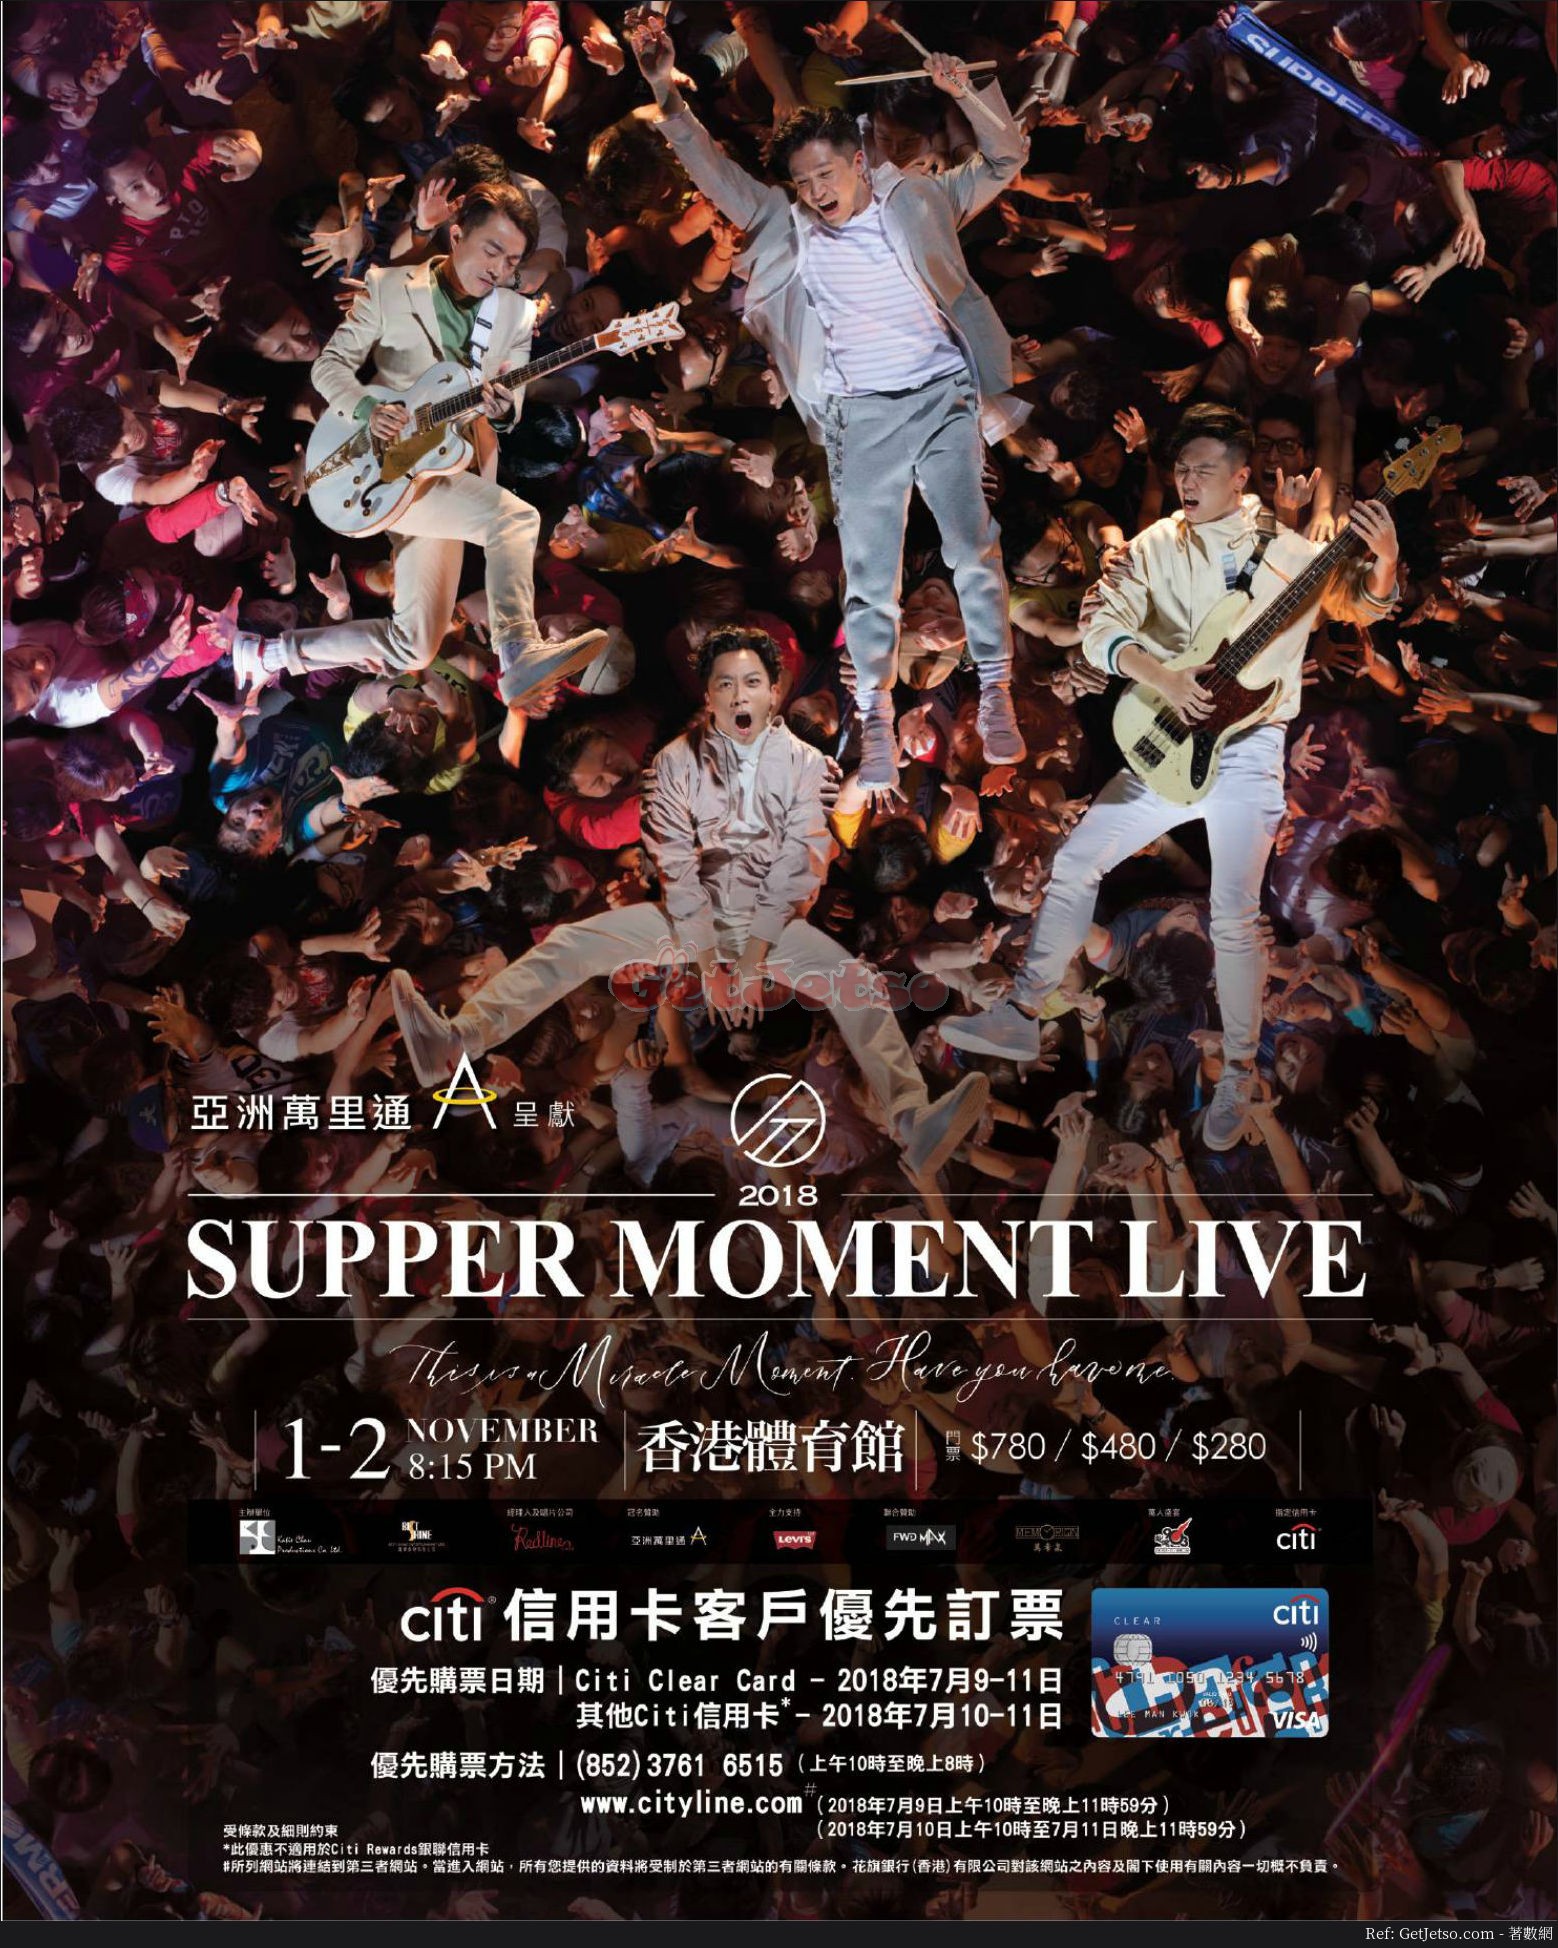 Super Moment Live 2108 優先訂票優惠@CITI信用卡(18年7月9-11日)圖片1